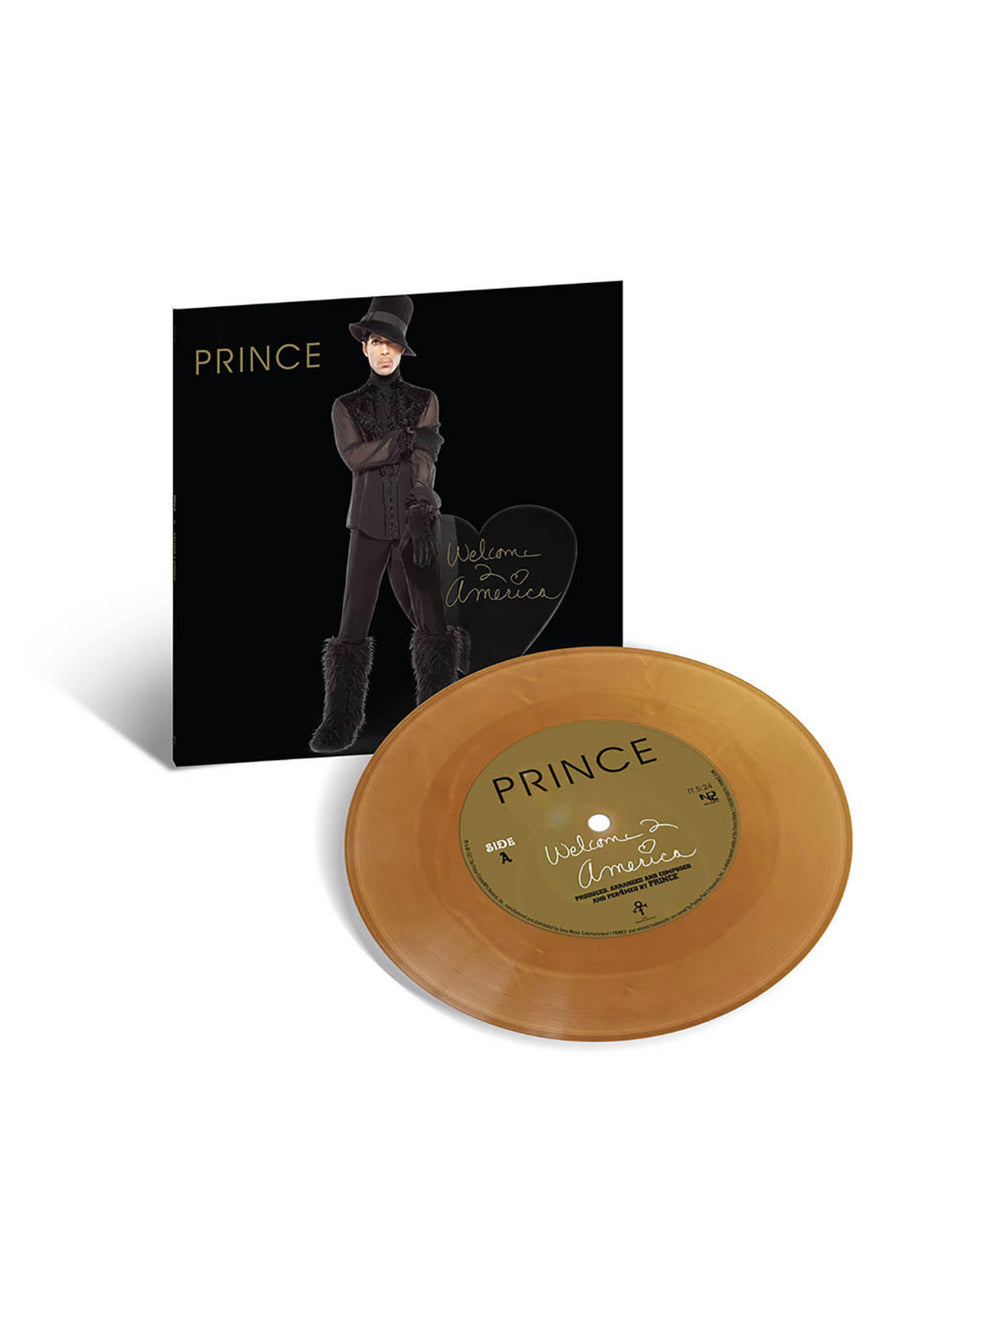 Prince – WELCOME 2 AMERICA (7" SINGLE) GOLD VINYL LTD ED NUMBER 000010